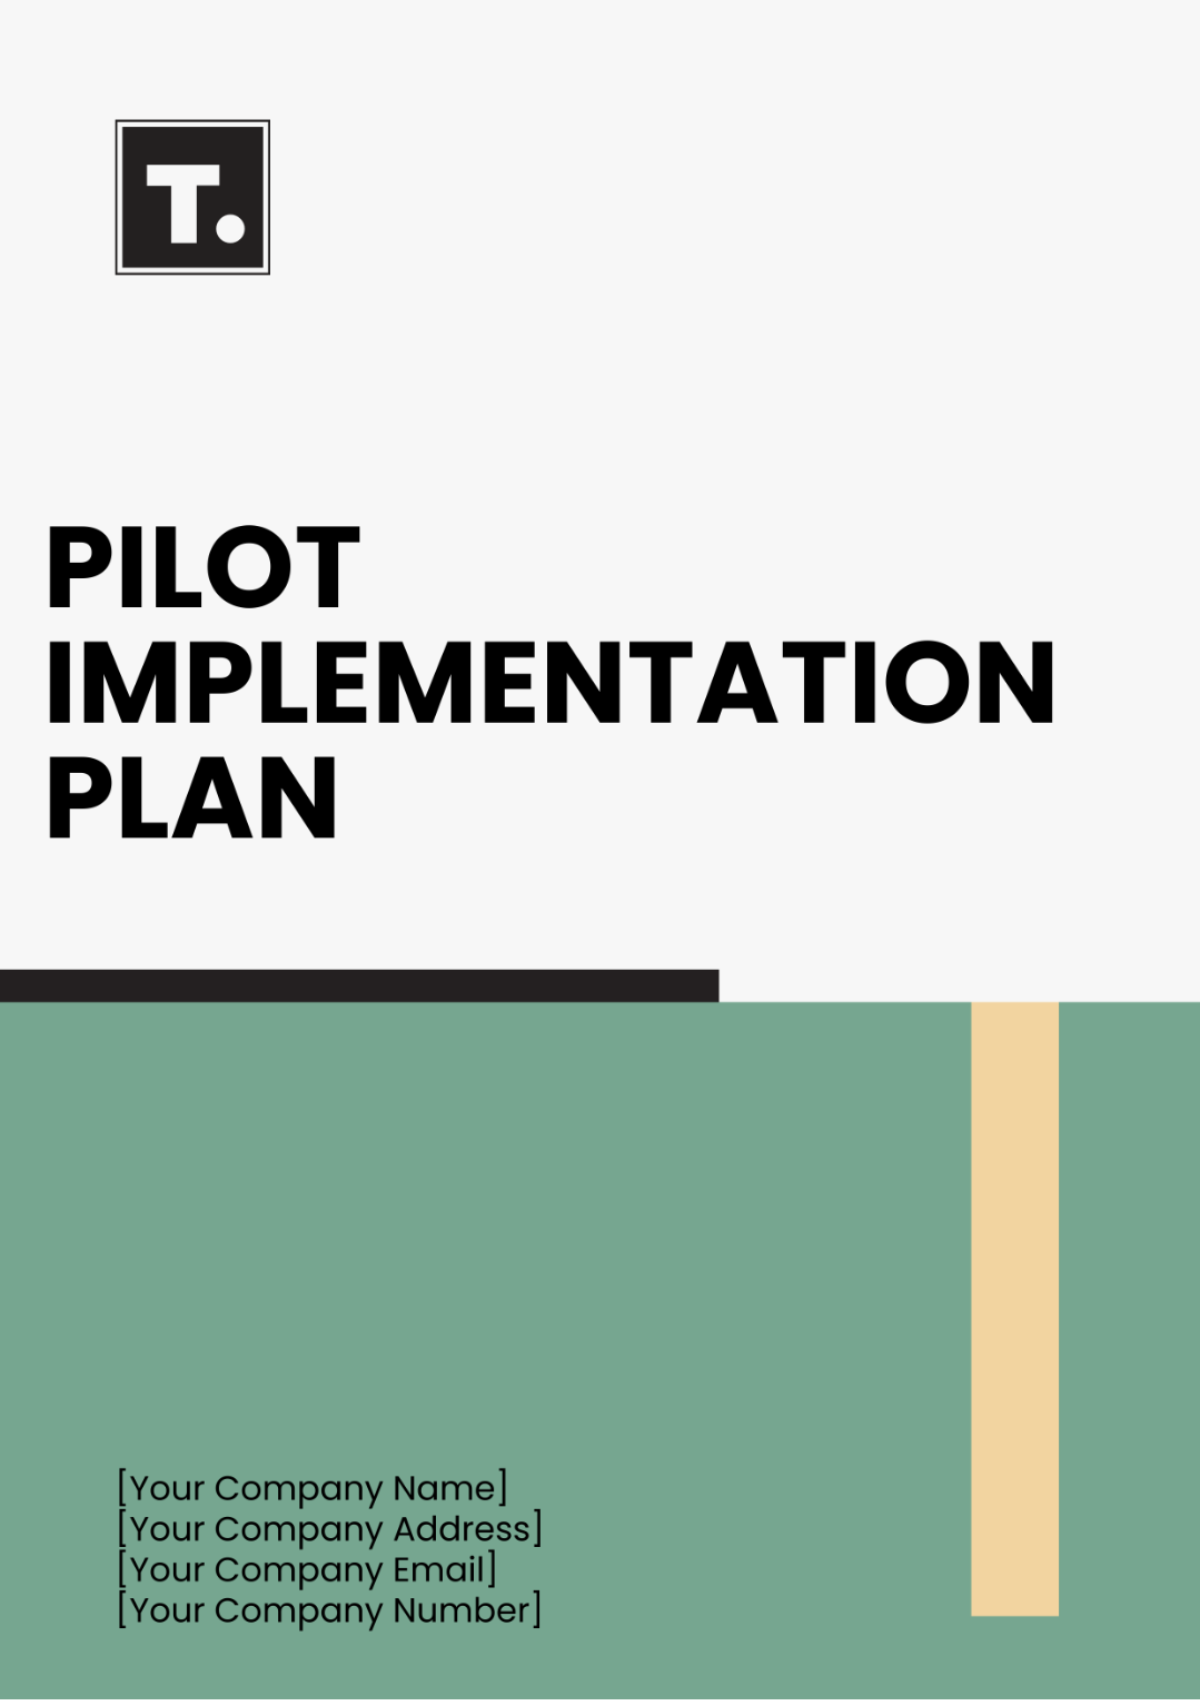 Pilot Implementation Plan Template